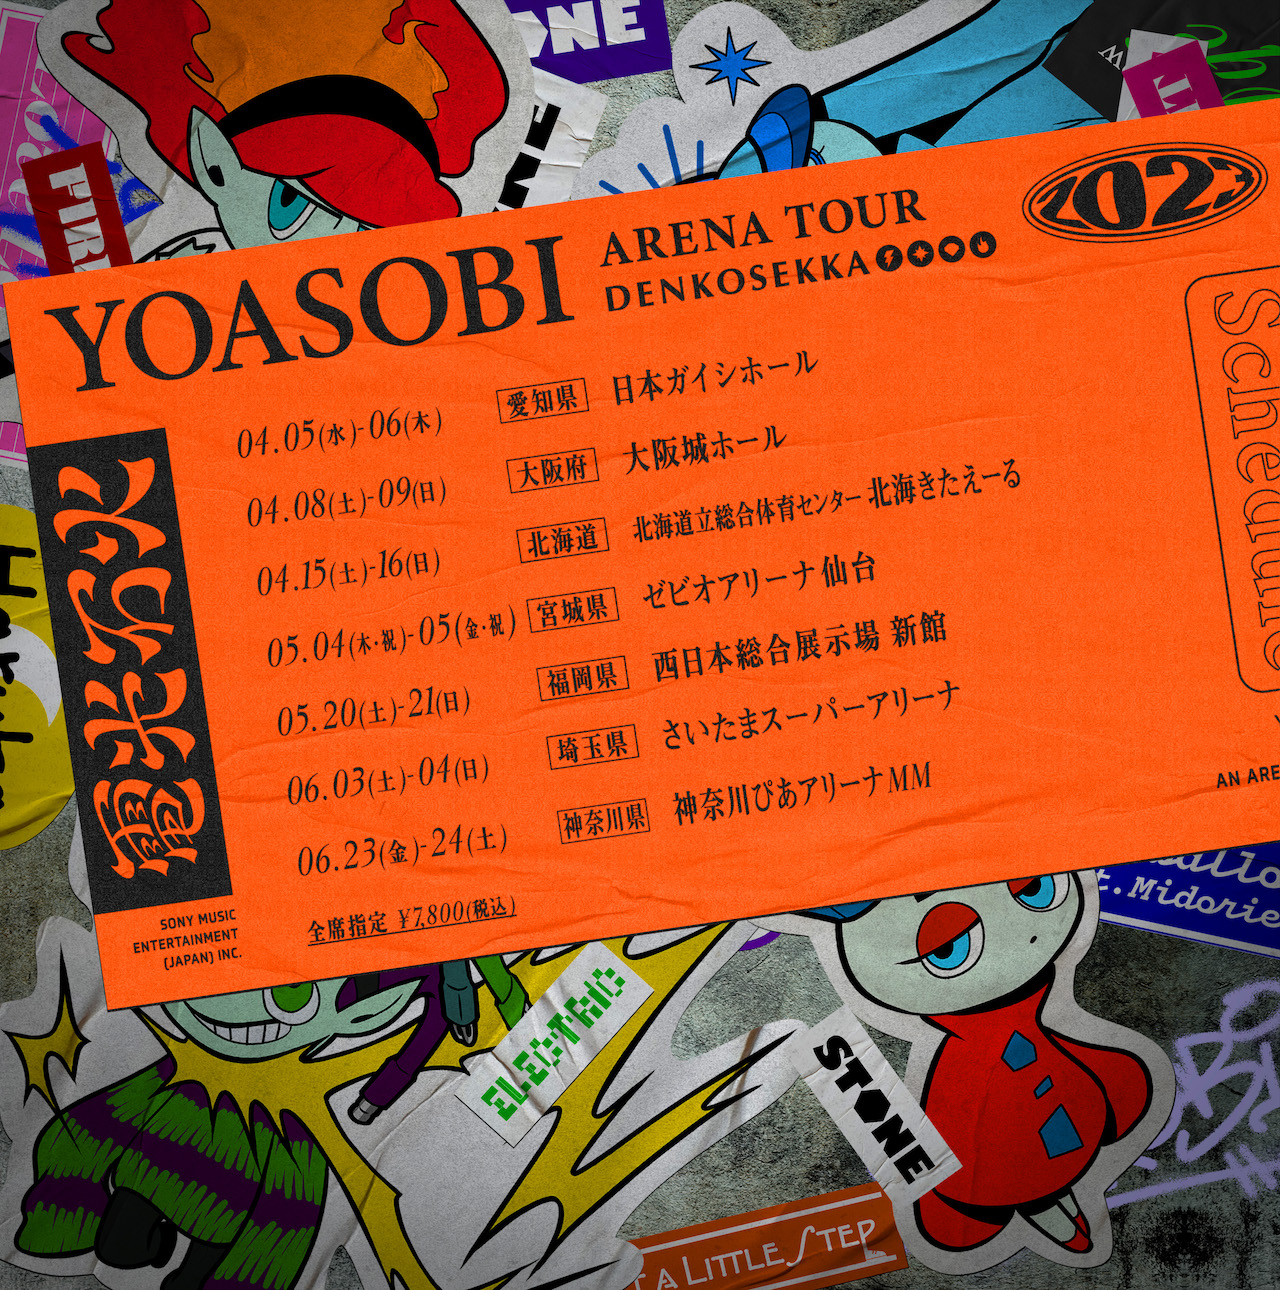 YOASOBI、ツアー『電光石火』さいたまスーパーアリーナ公演の生配信が決定 - 画像一覧（1/2）